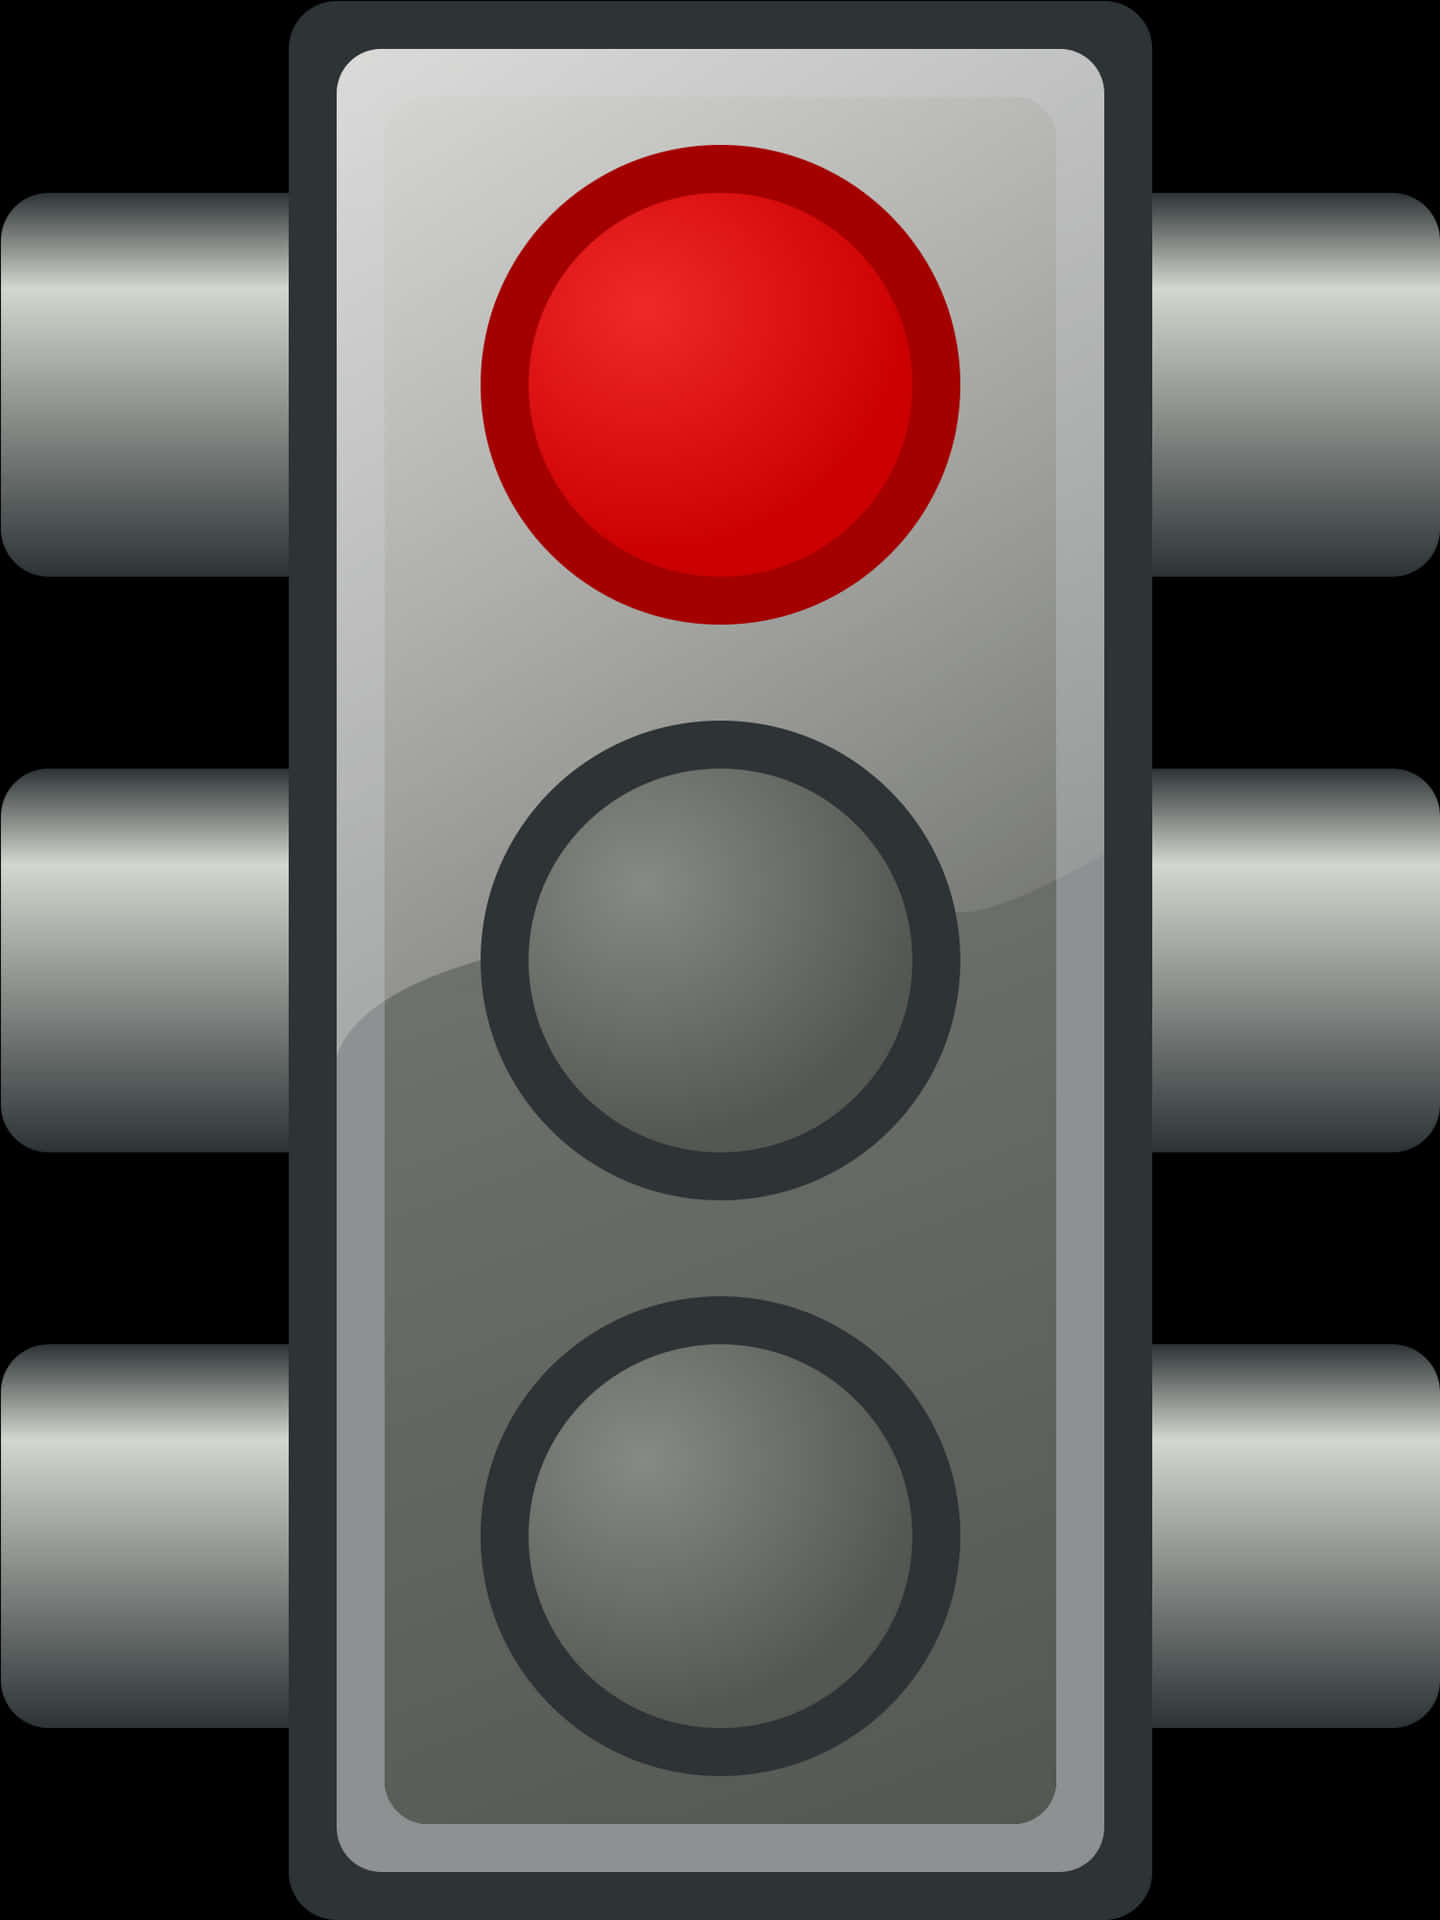 Red Traffic Light Illustration PNG